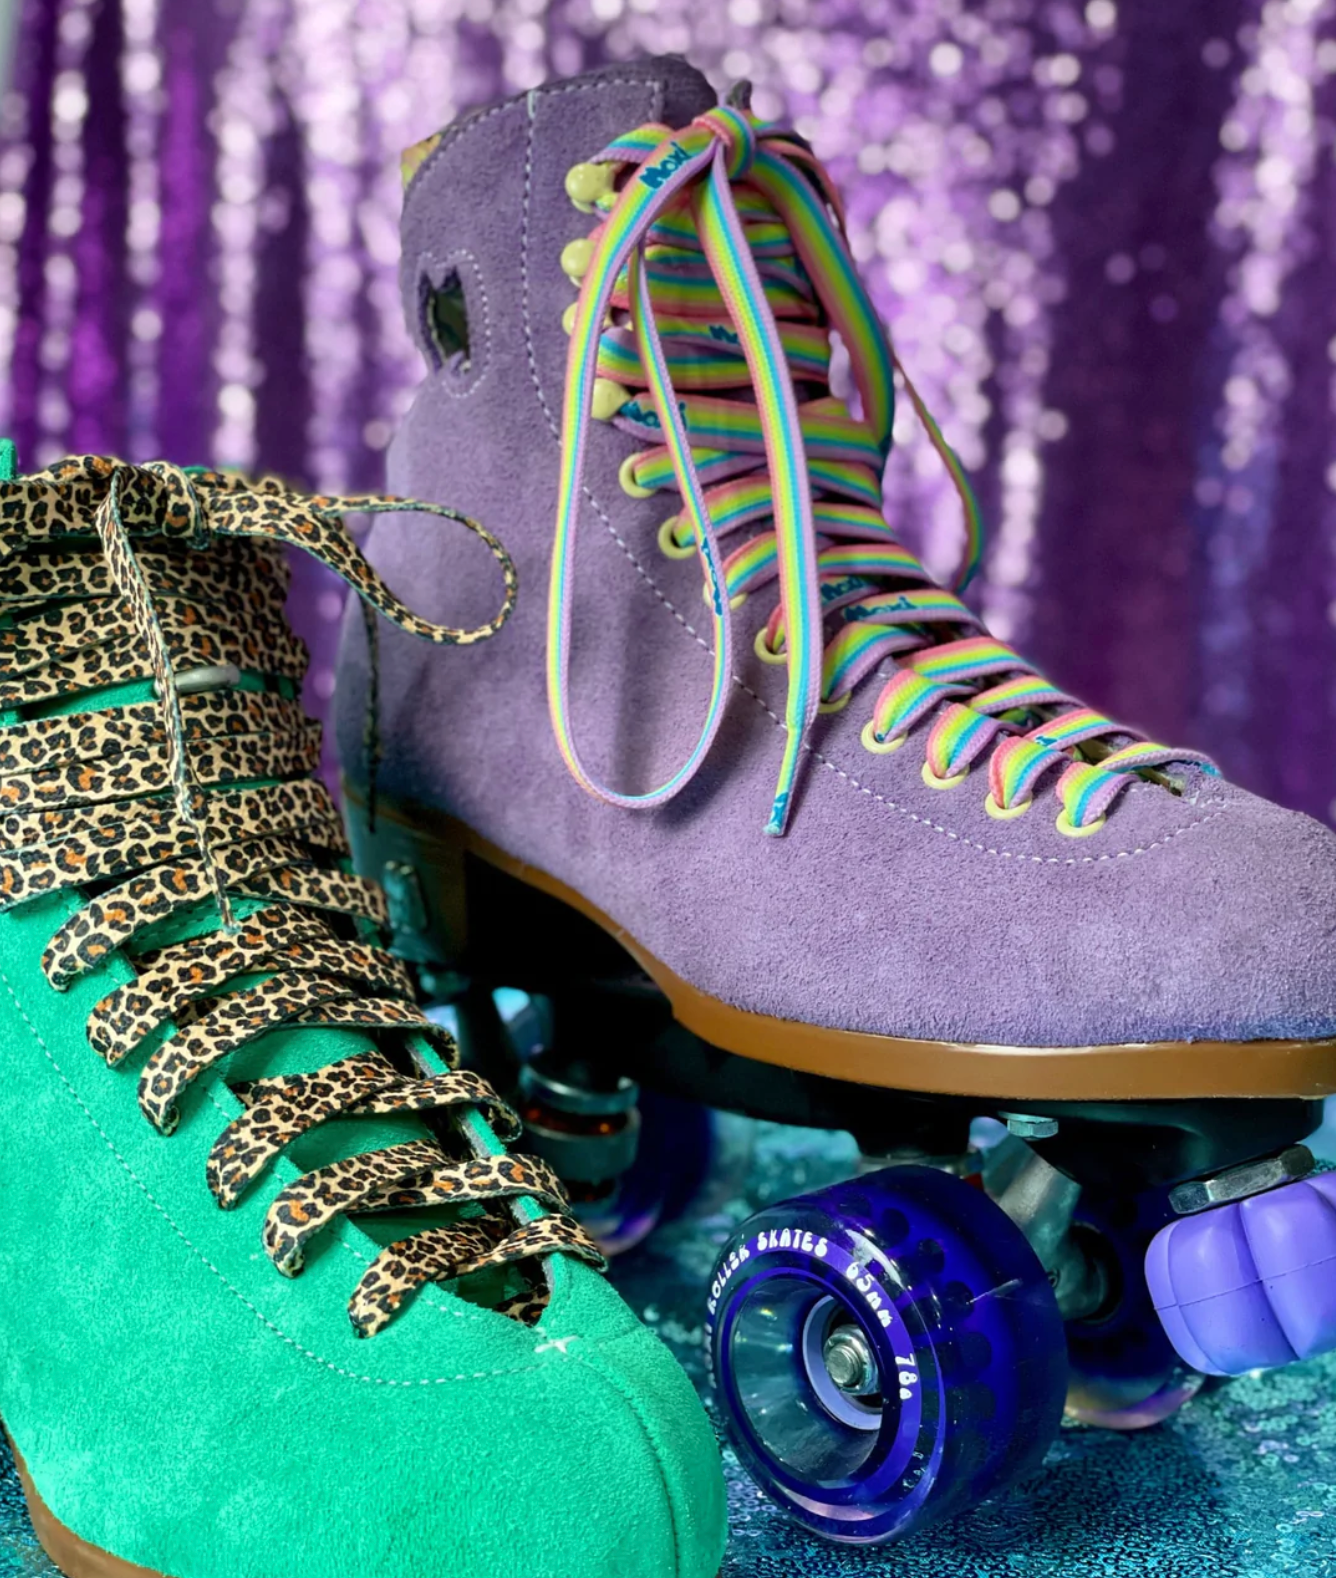 Moxi roller skate laces